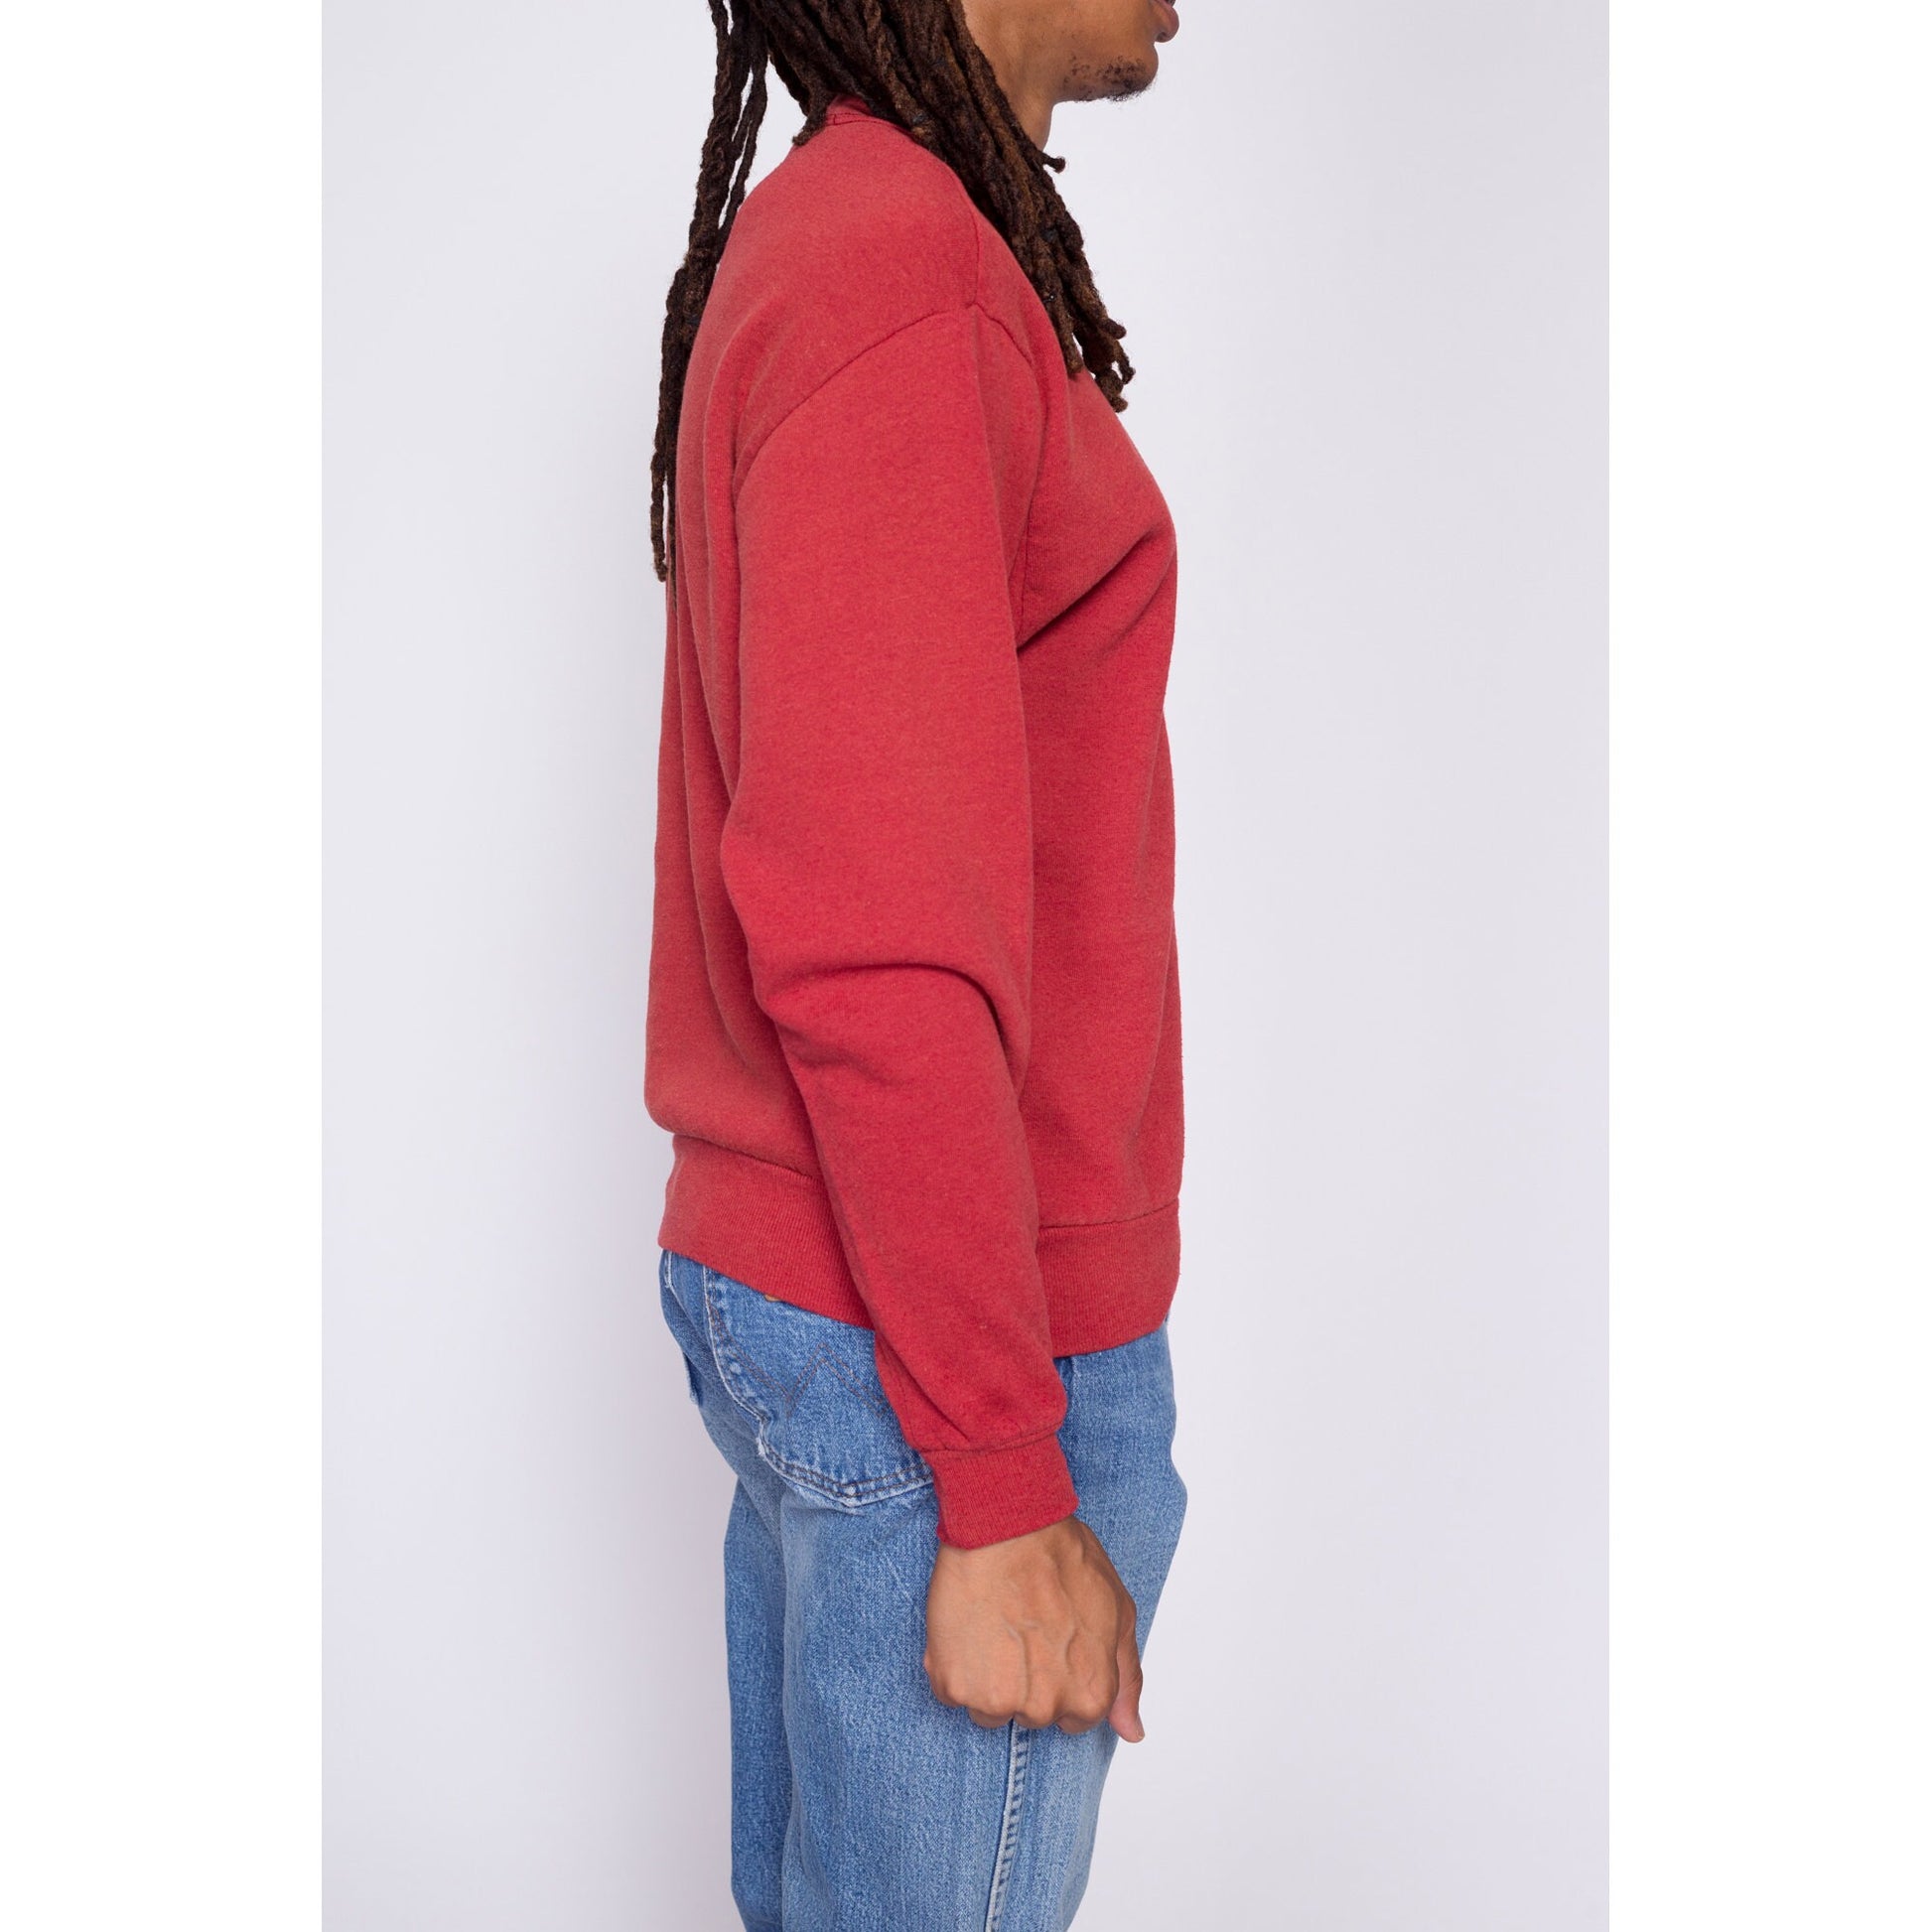 90s Faded Red Crewneck Sweatshirt - Men's Medium | Vintage Made In USA Jerzees Plain Pullover Crew Neck